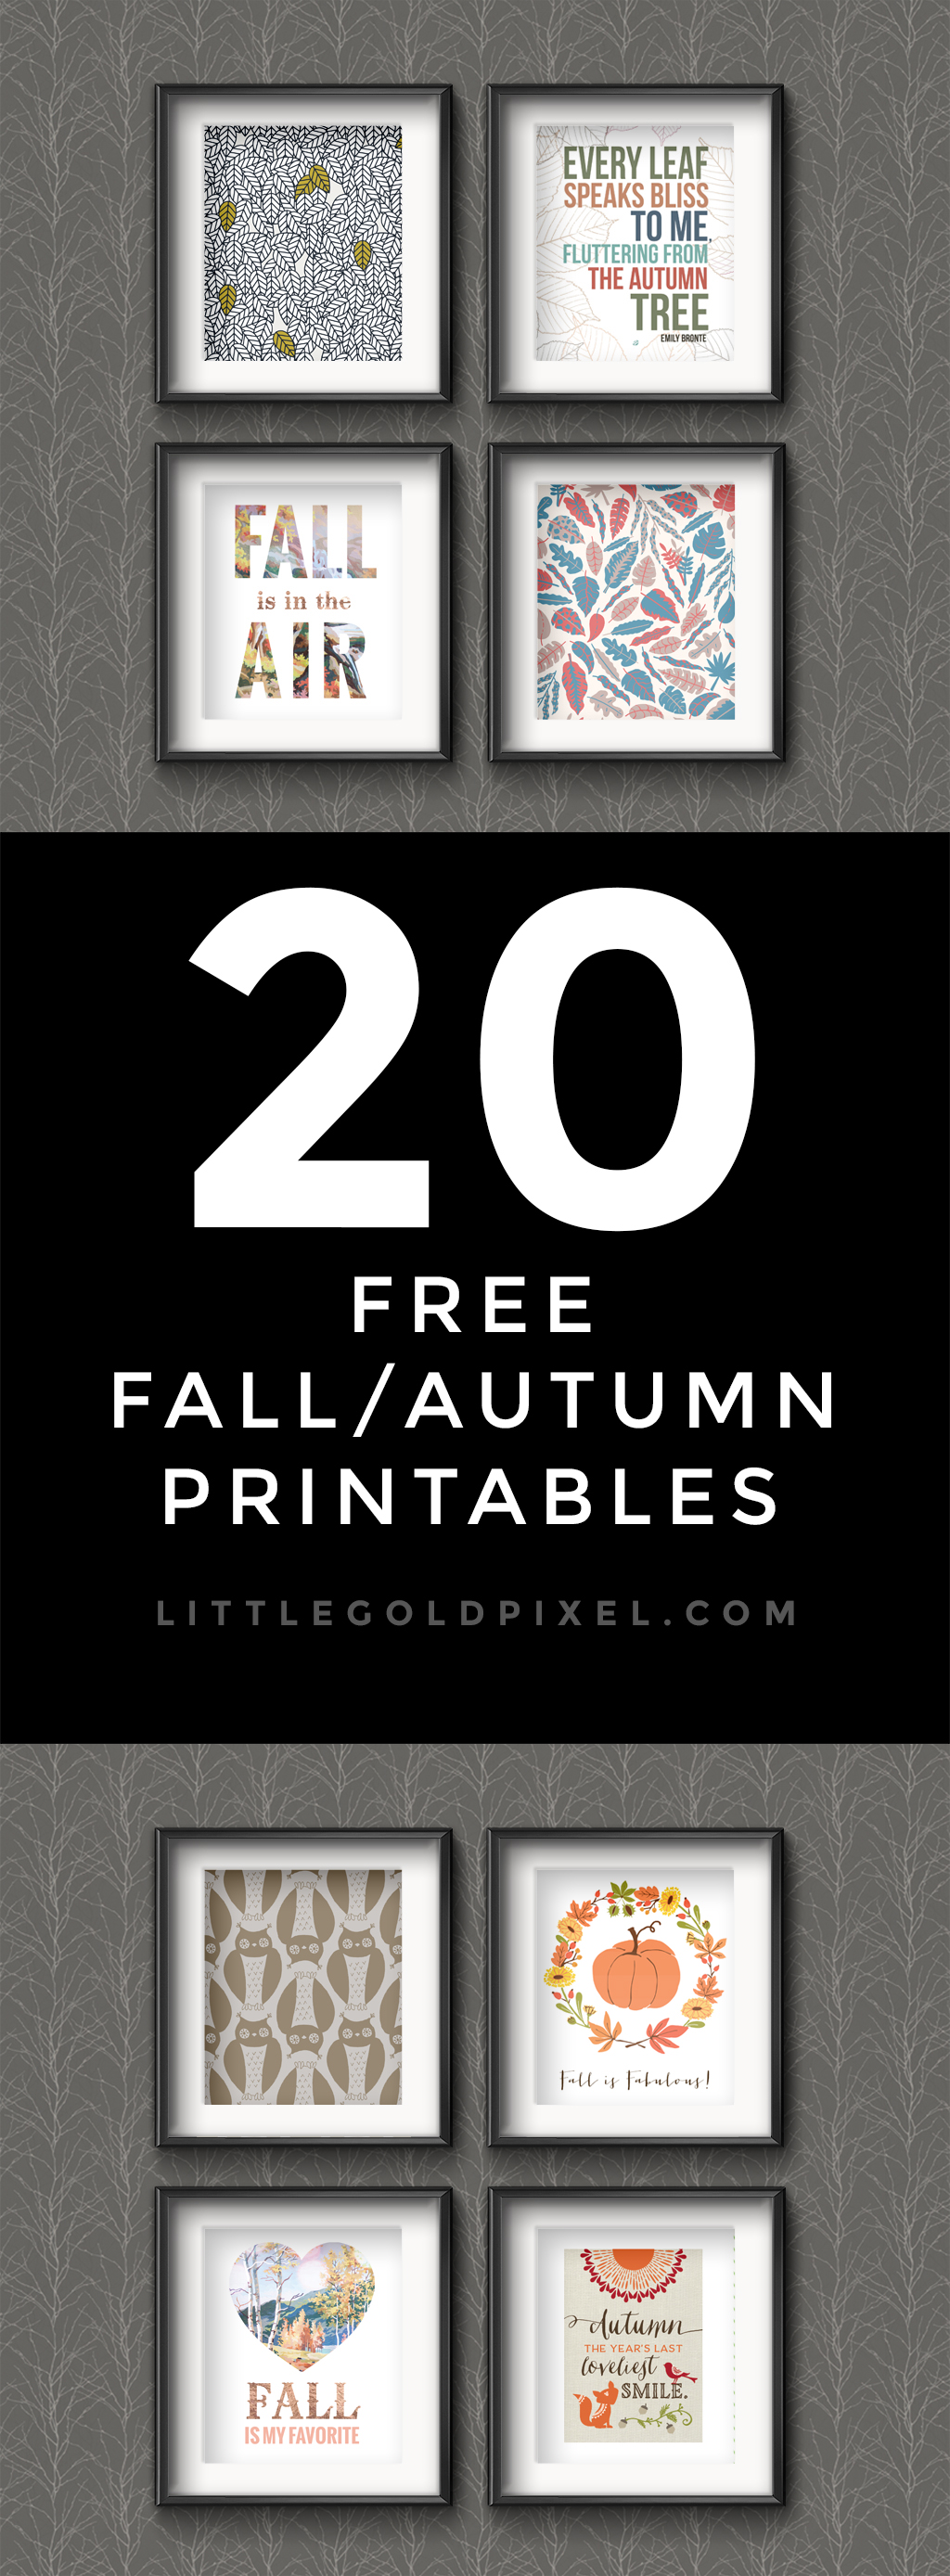 20 Awesome Free Fall Printables